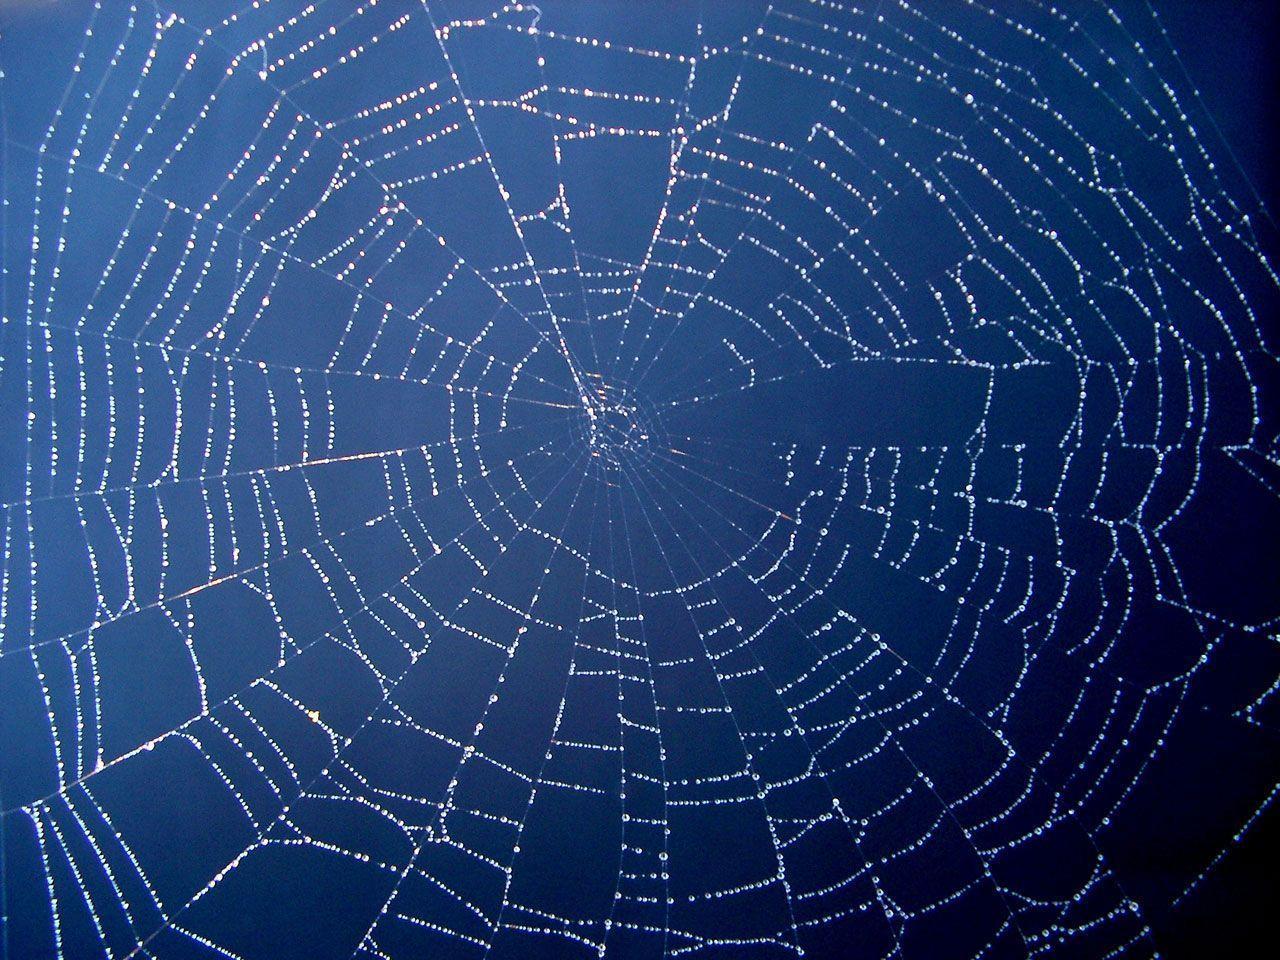 Spider Web Background 139777 High Definition Wallpaper. Suwall